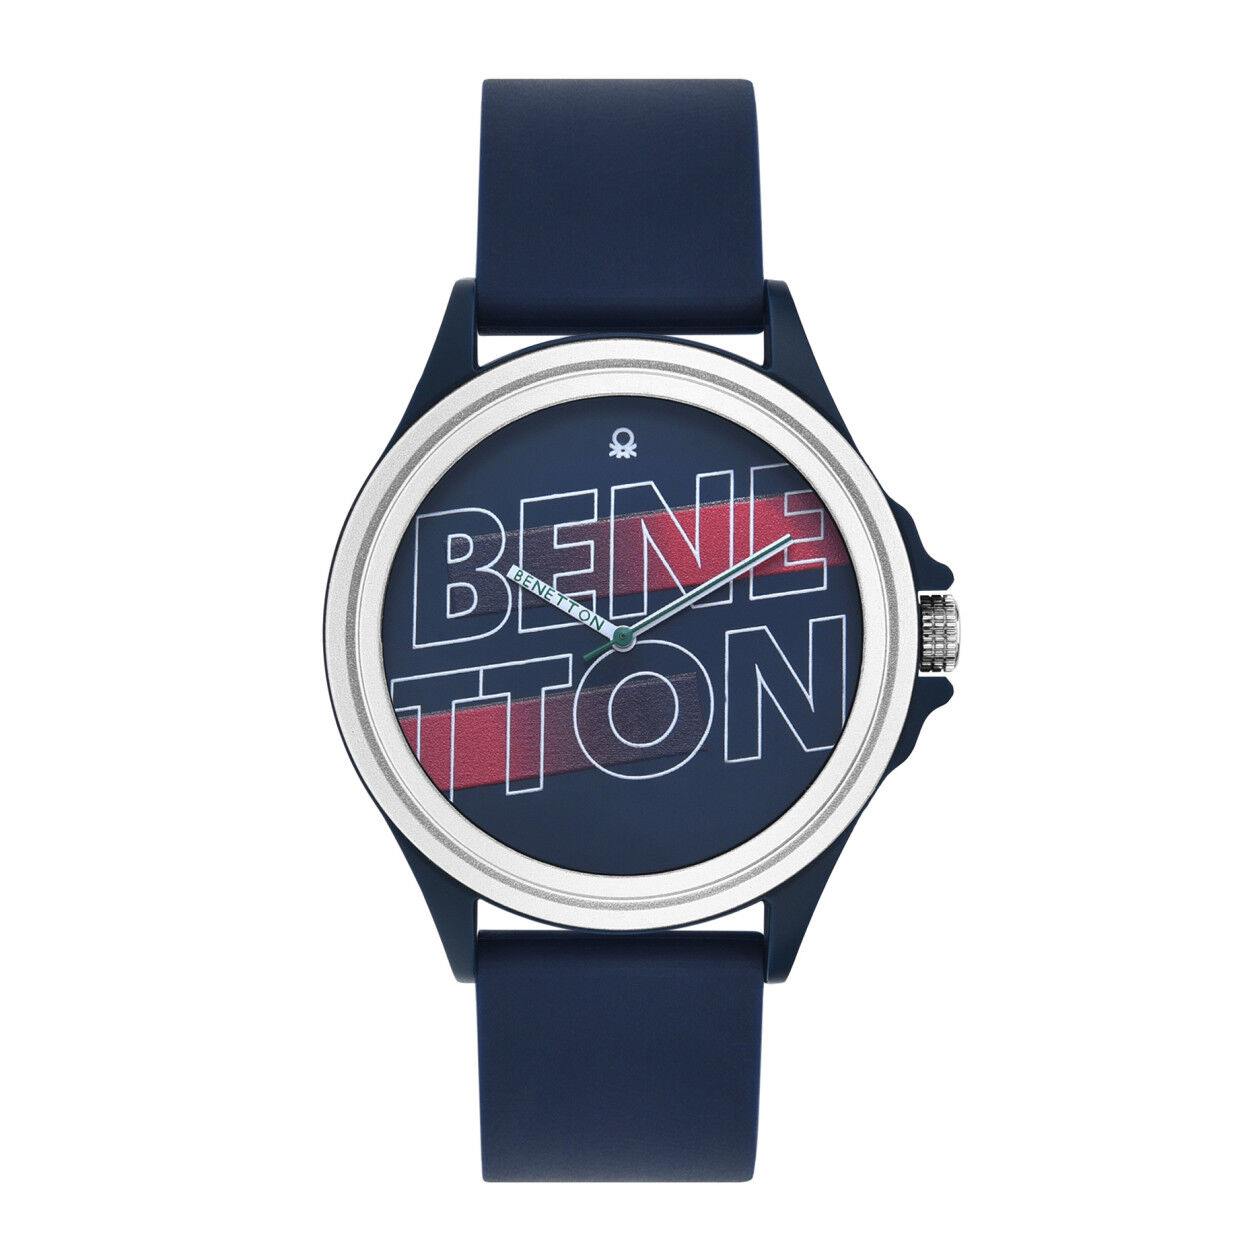 UNITED COLORS OF BENETTON by BULOVA Aluminium Swiss Mens Quartz Watch $9.99  - PicClick